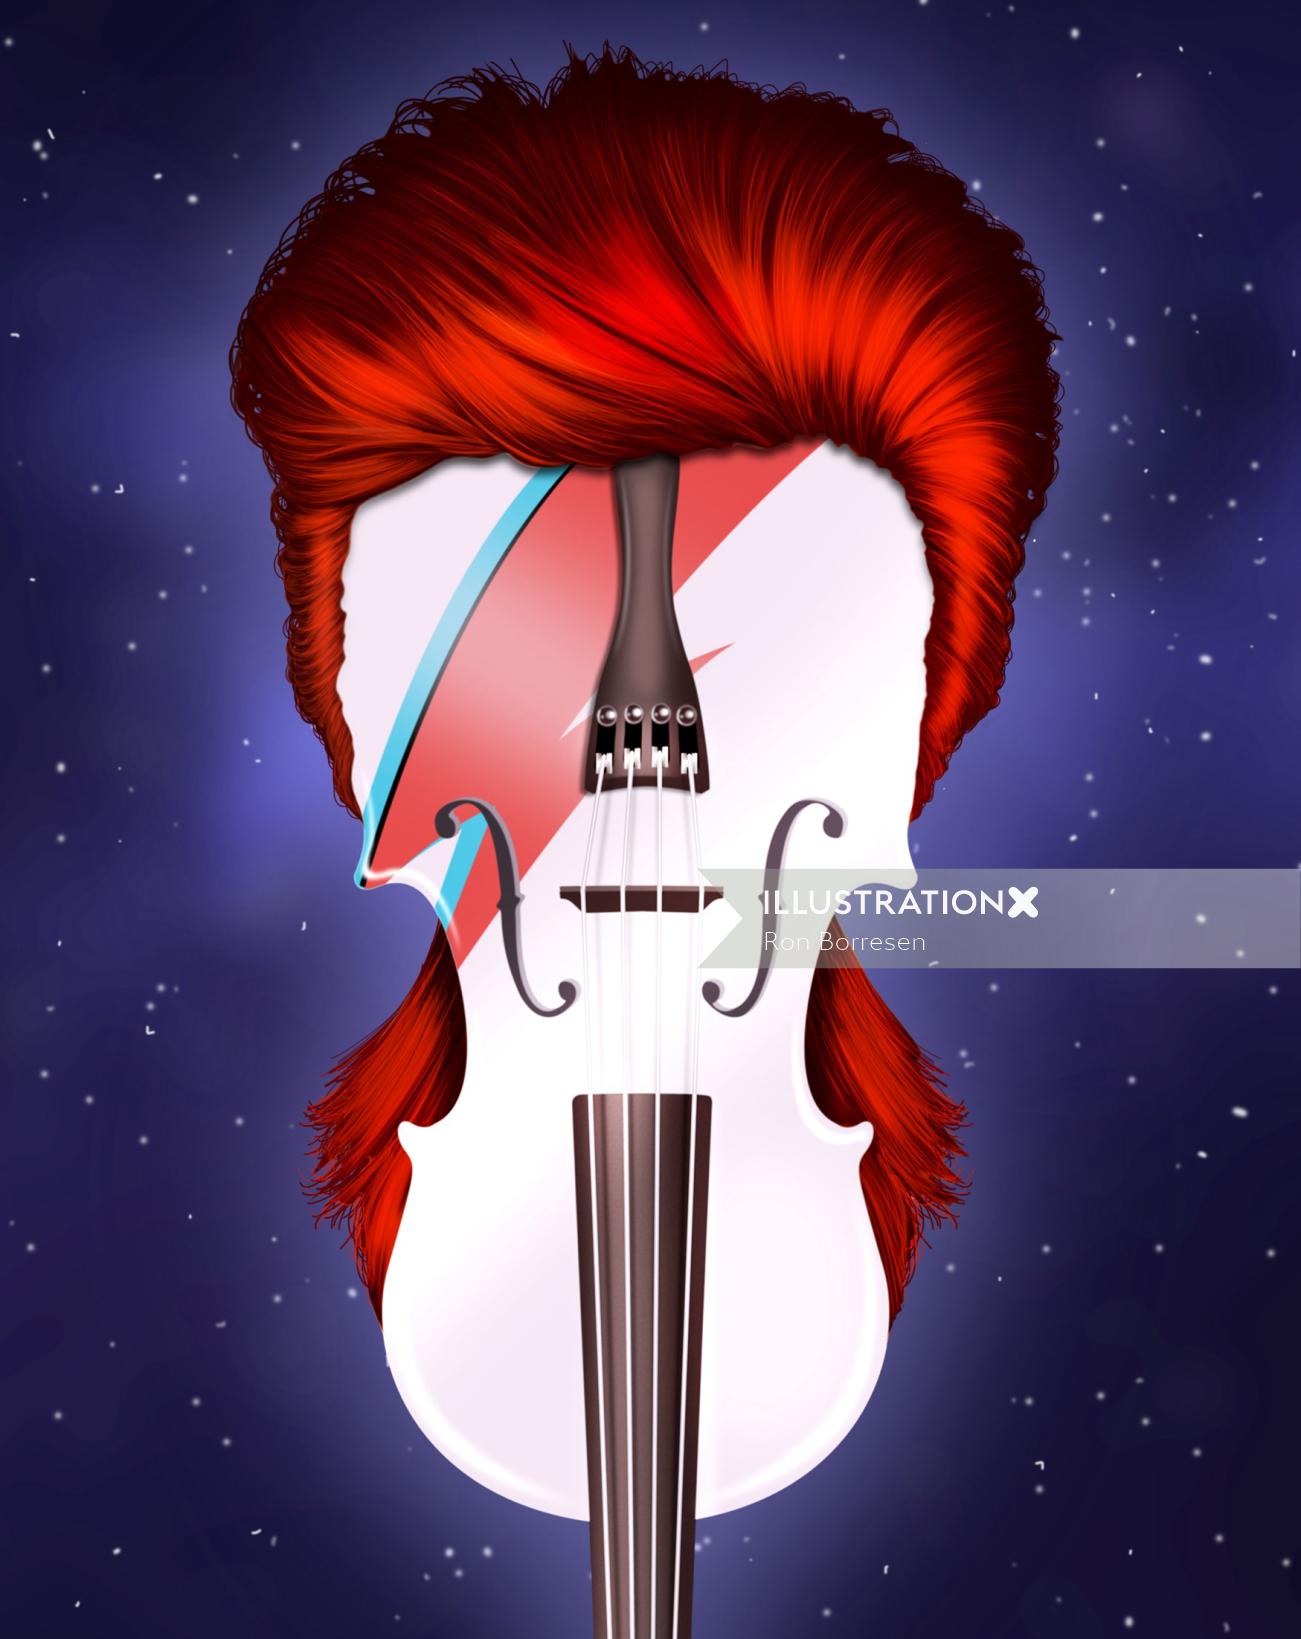 Illustration of Violin in human face
